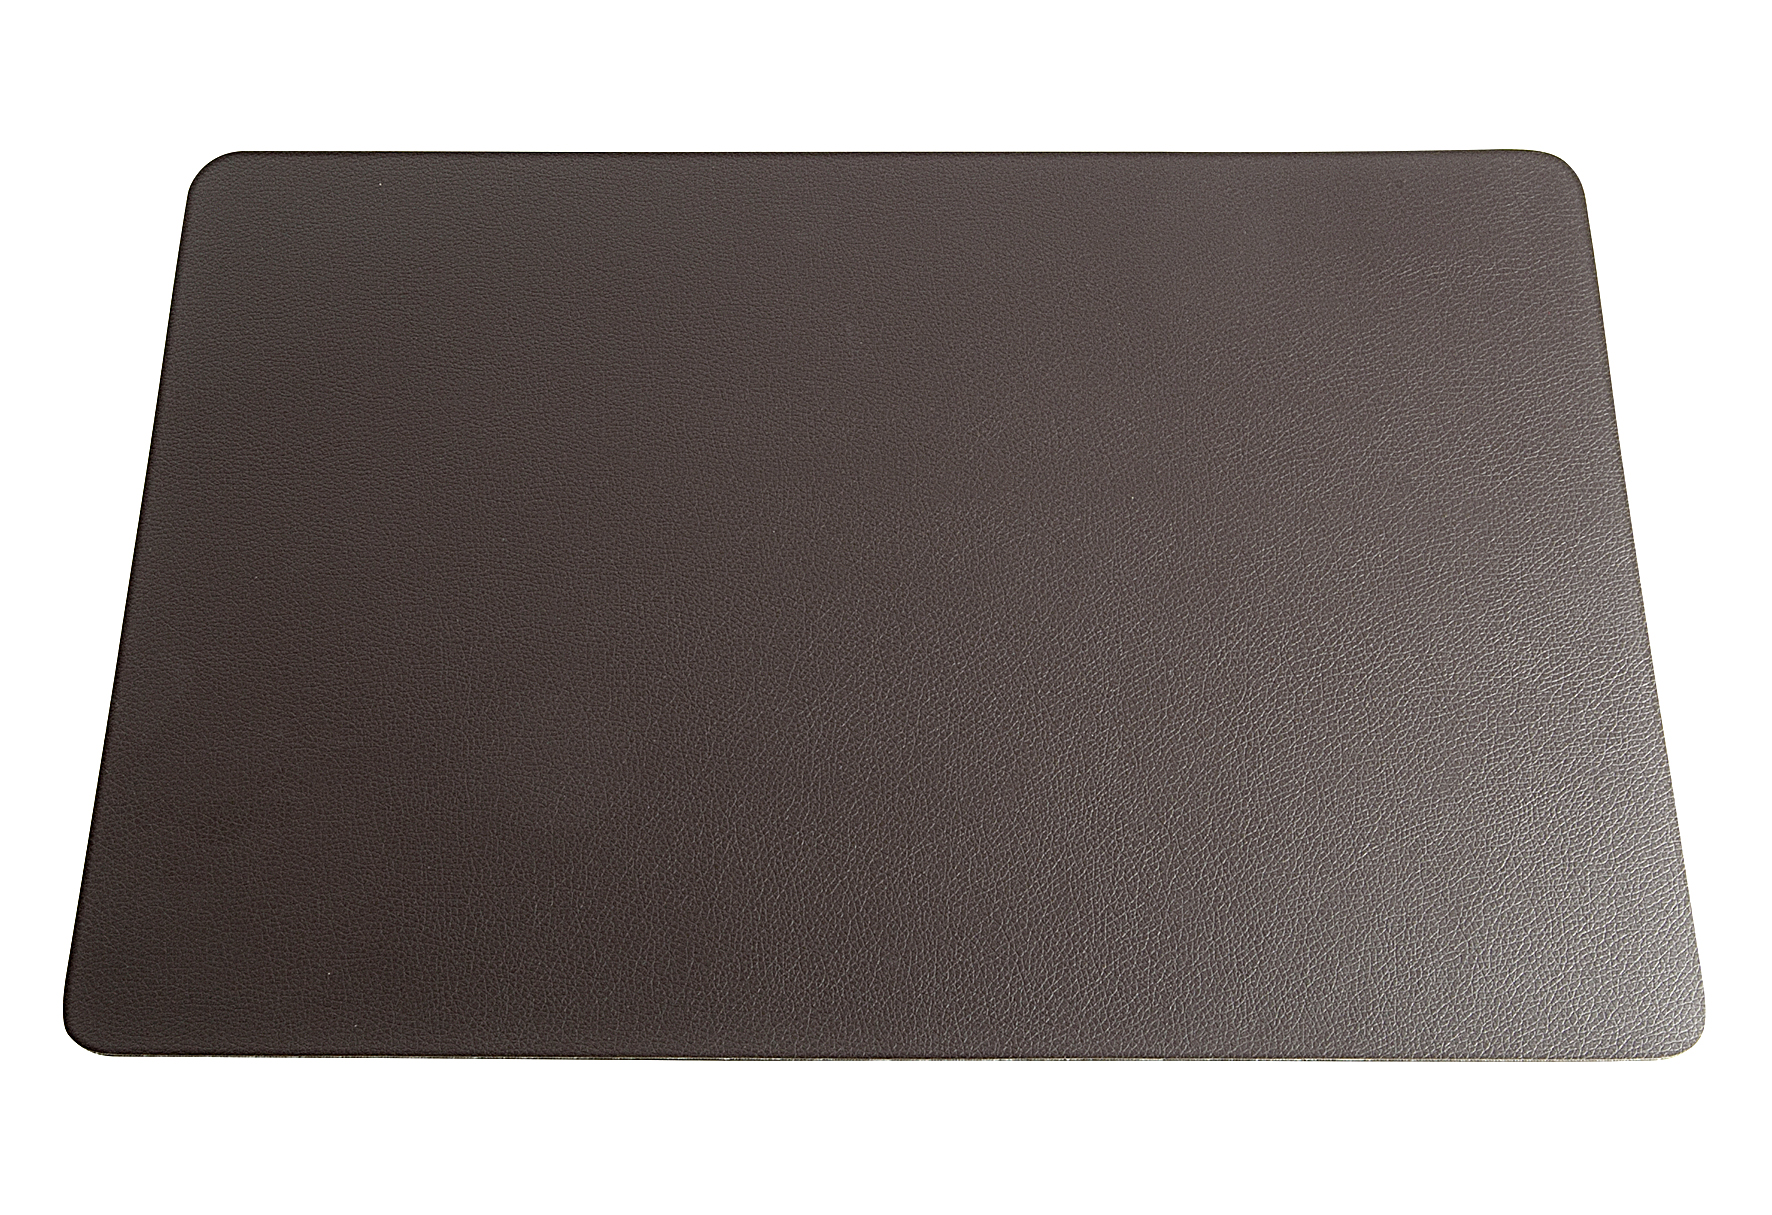  leather optic fine Tischset, braun  Breite: 33cm Länge: 46cm  PVC - Lederoptik 